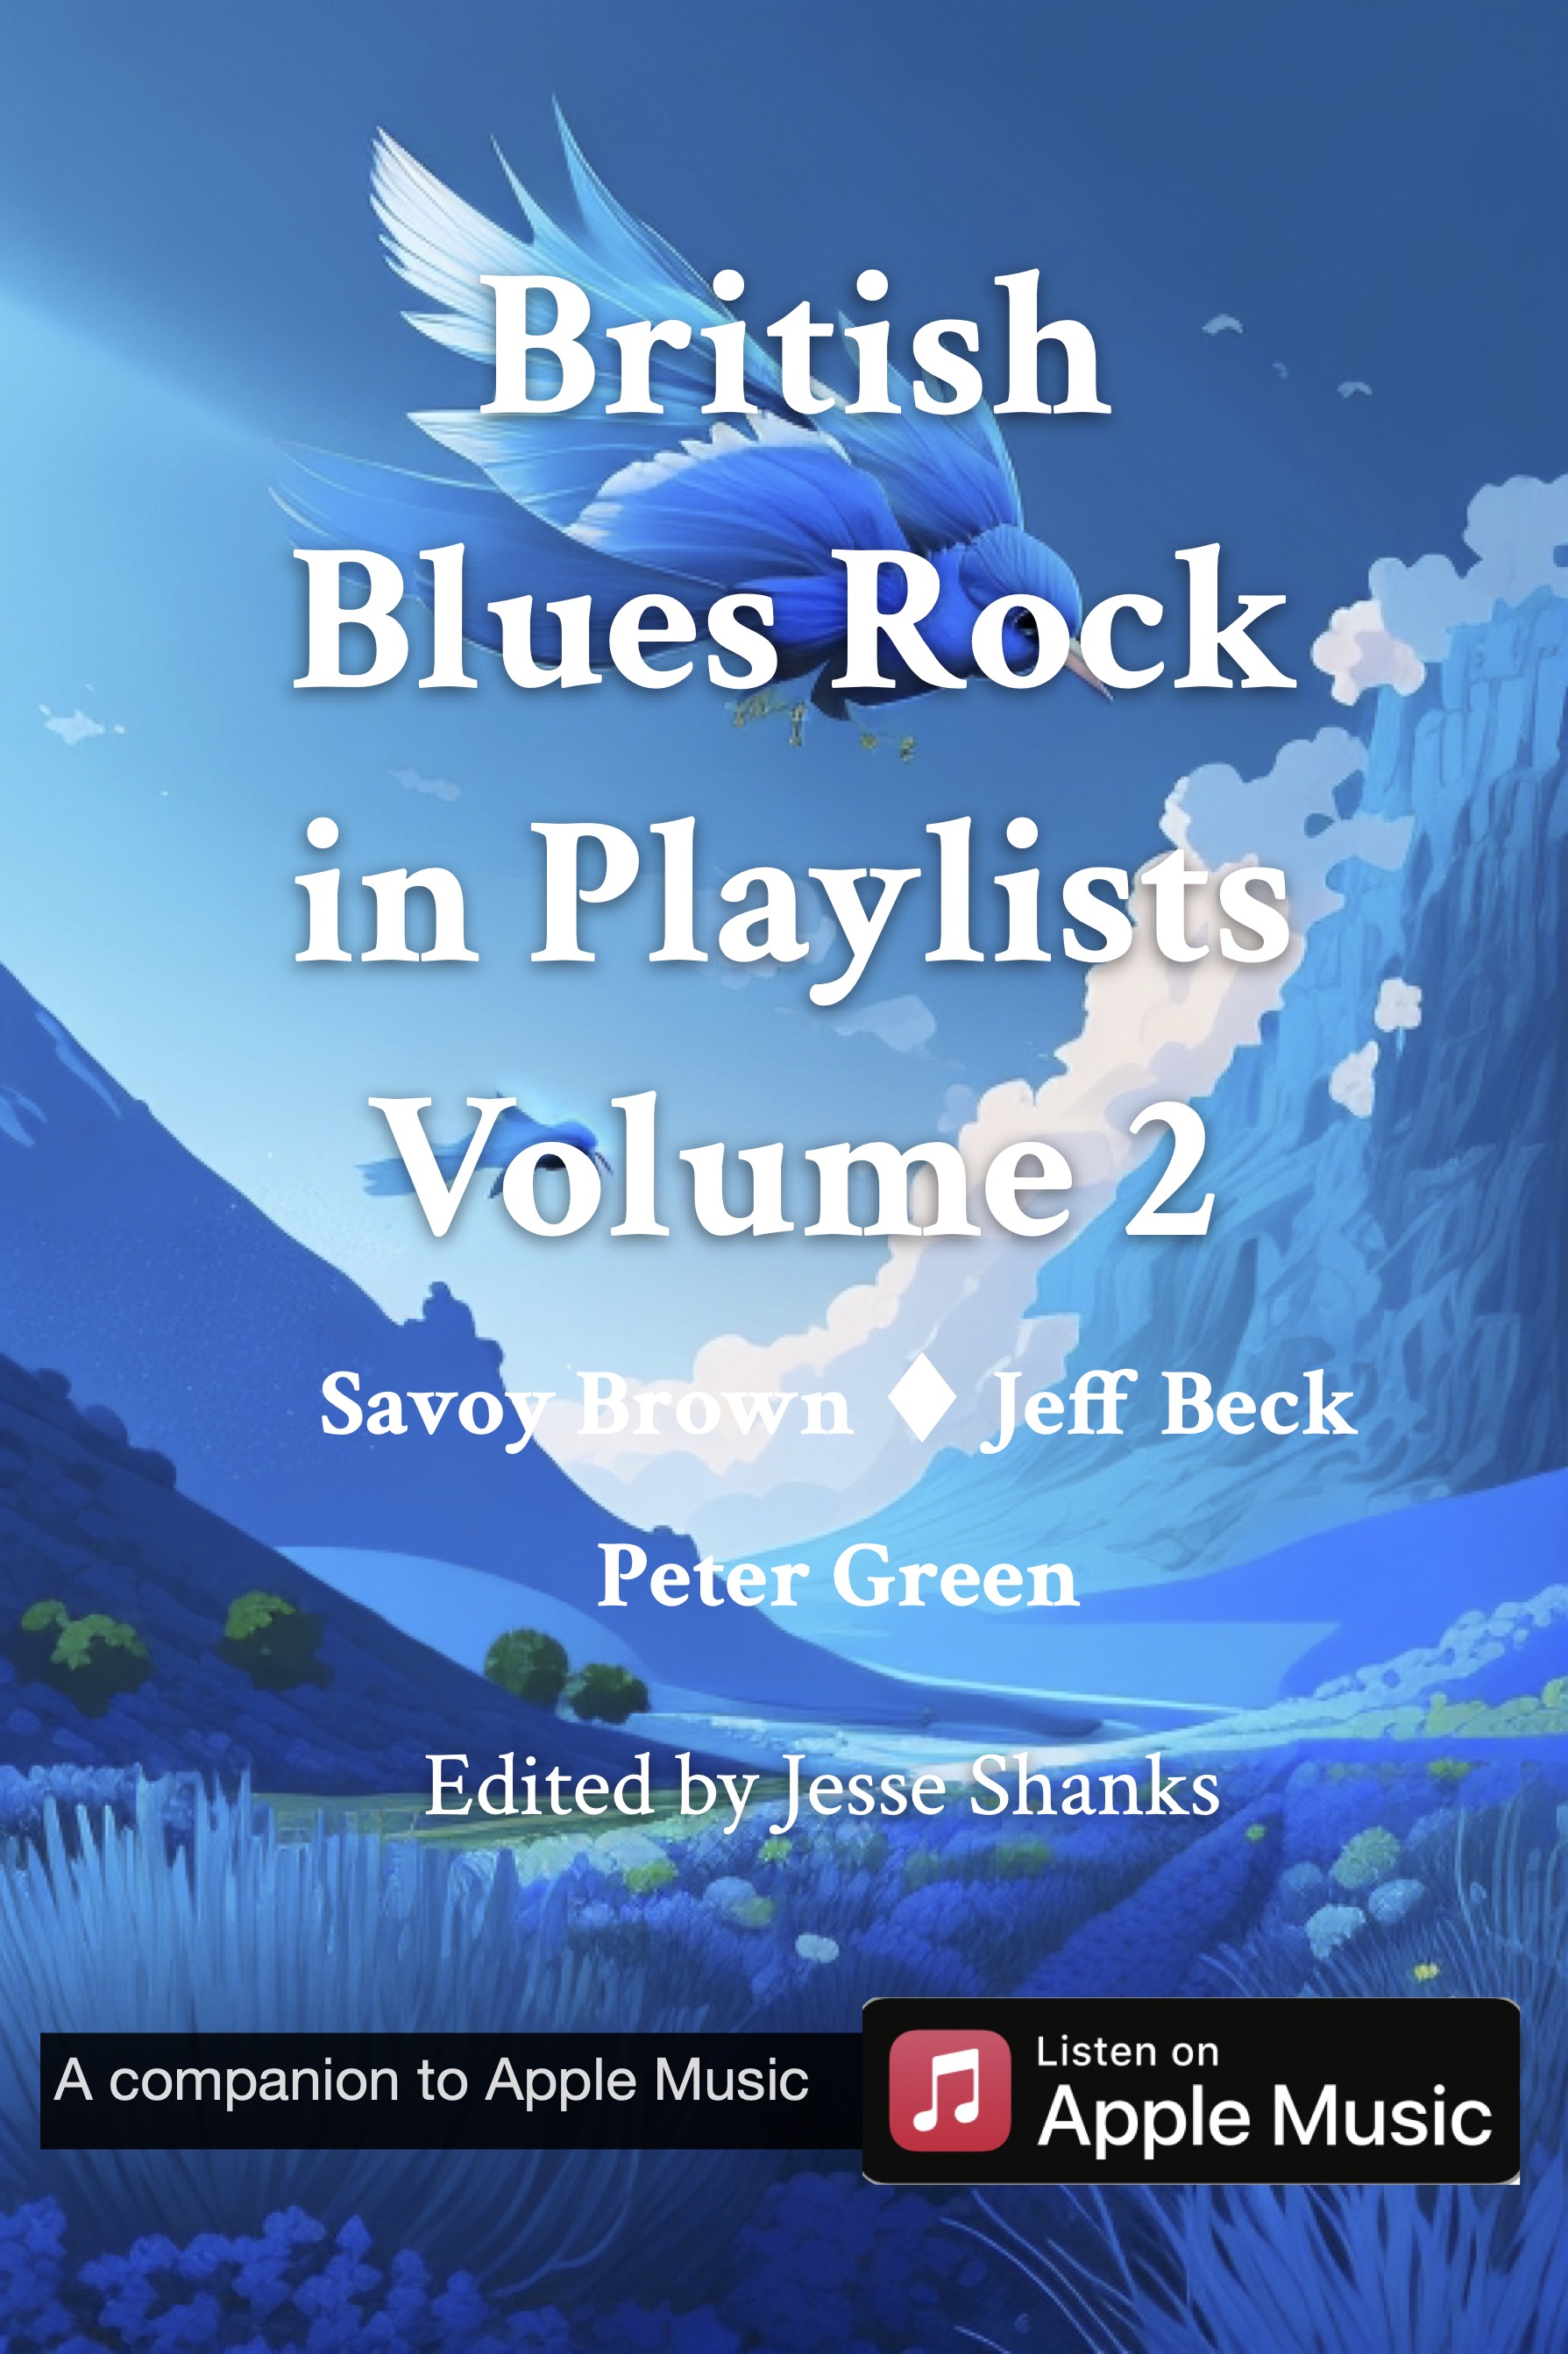 British Blues Rock in Playlists Vol 2